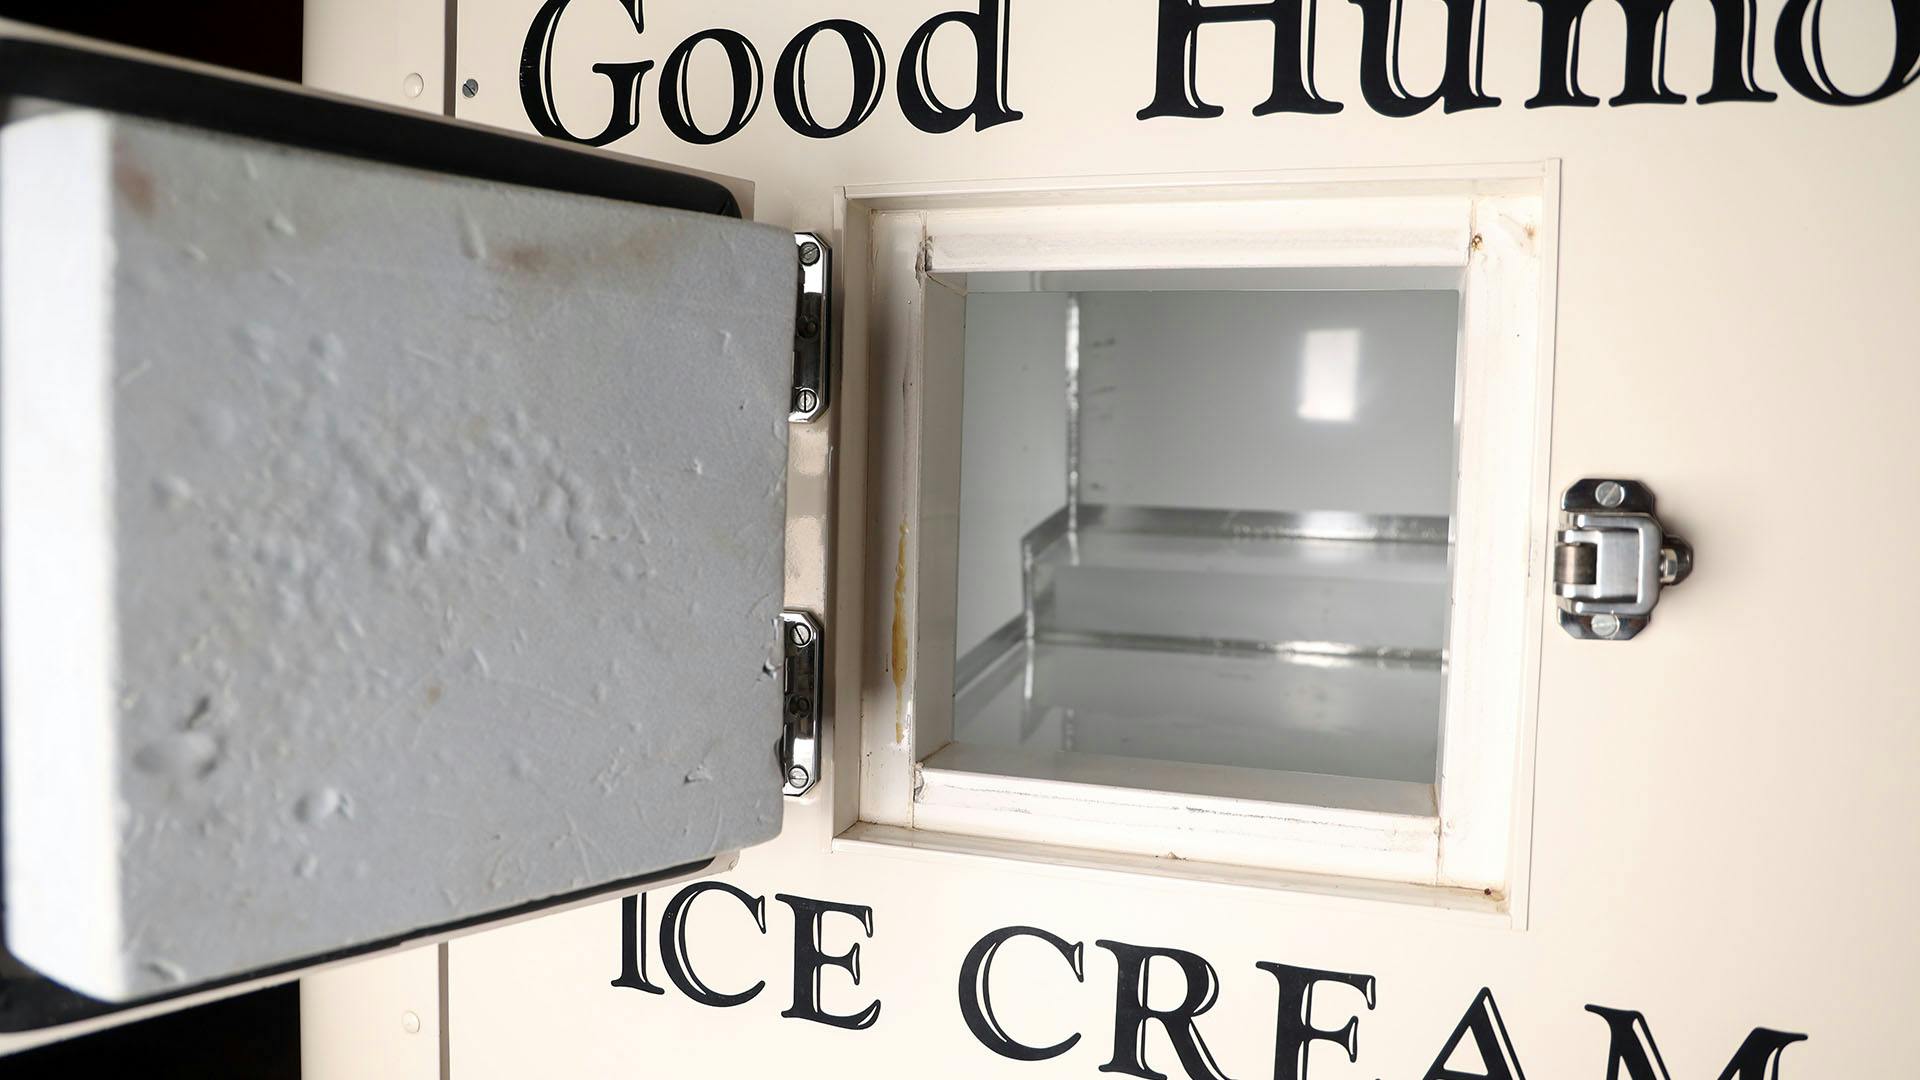 Good Humor Ice Cream Truck interior ice box door